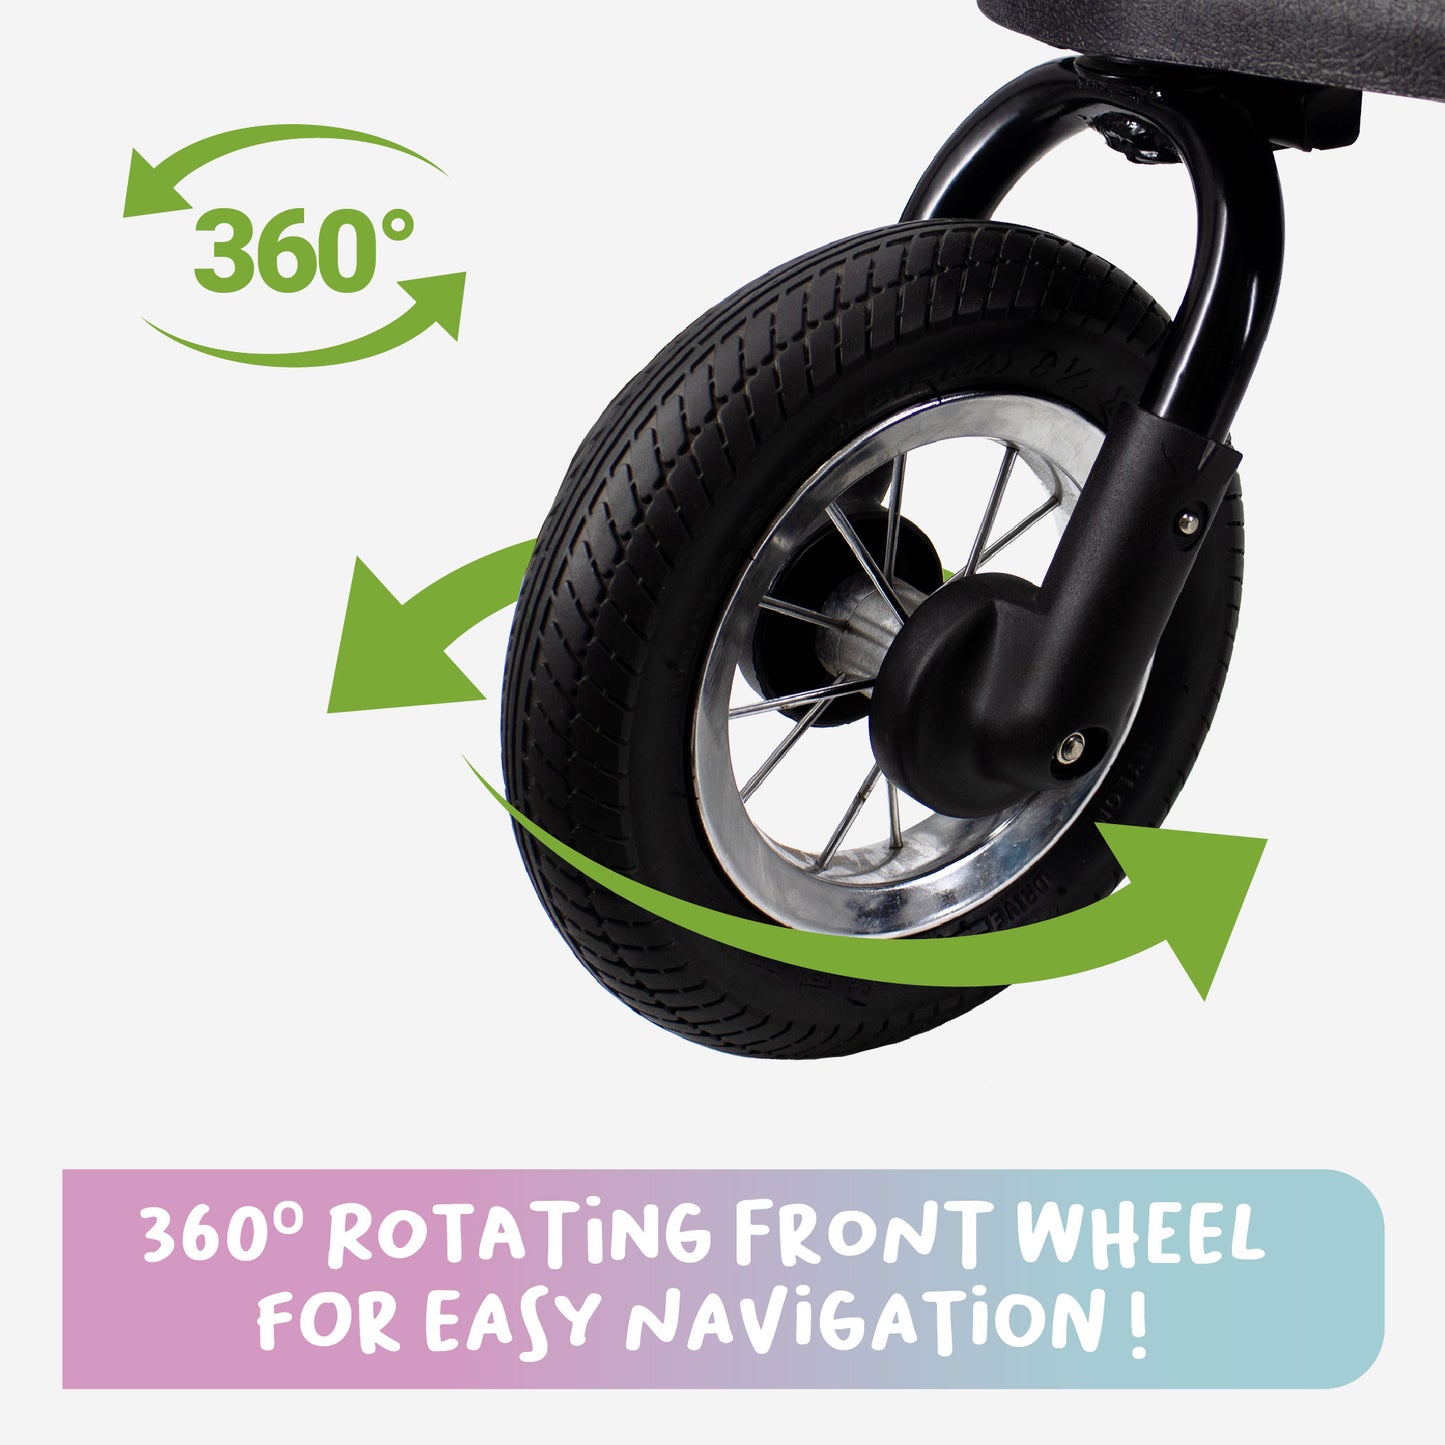 5-in-1 pet stroller front wheel